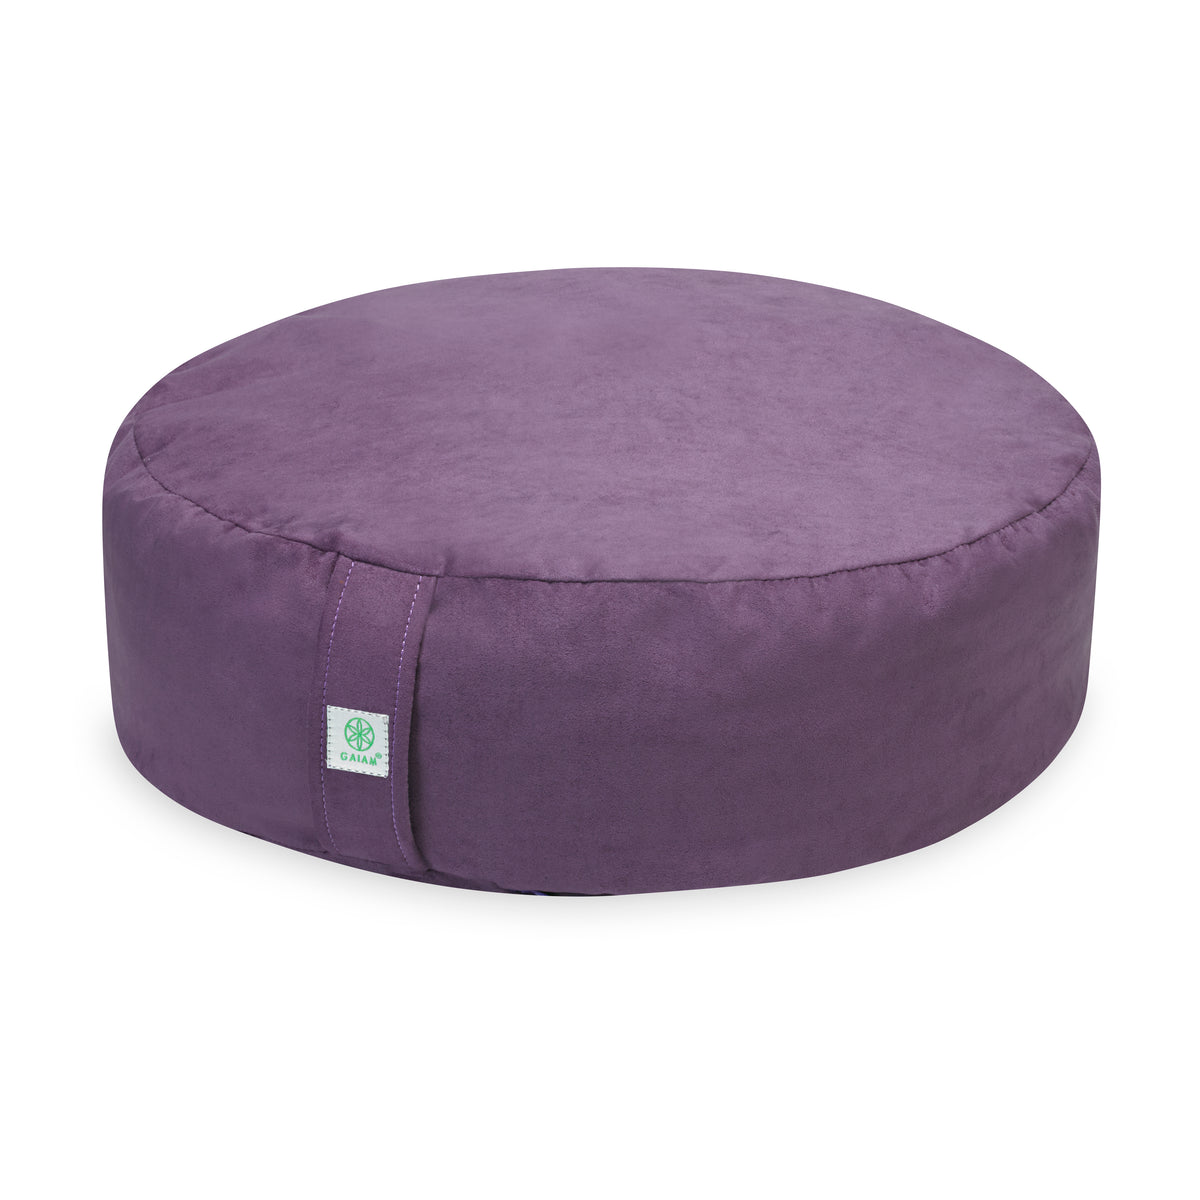 Gaiam Zafu Meditation Cushion purple